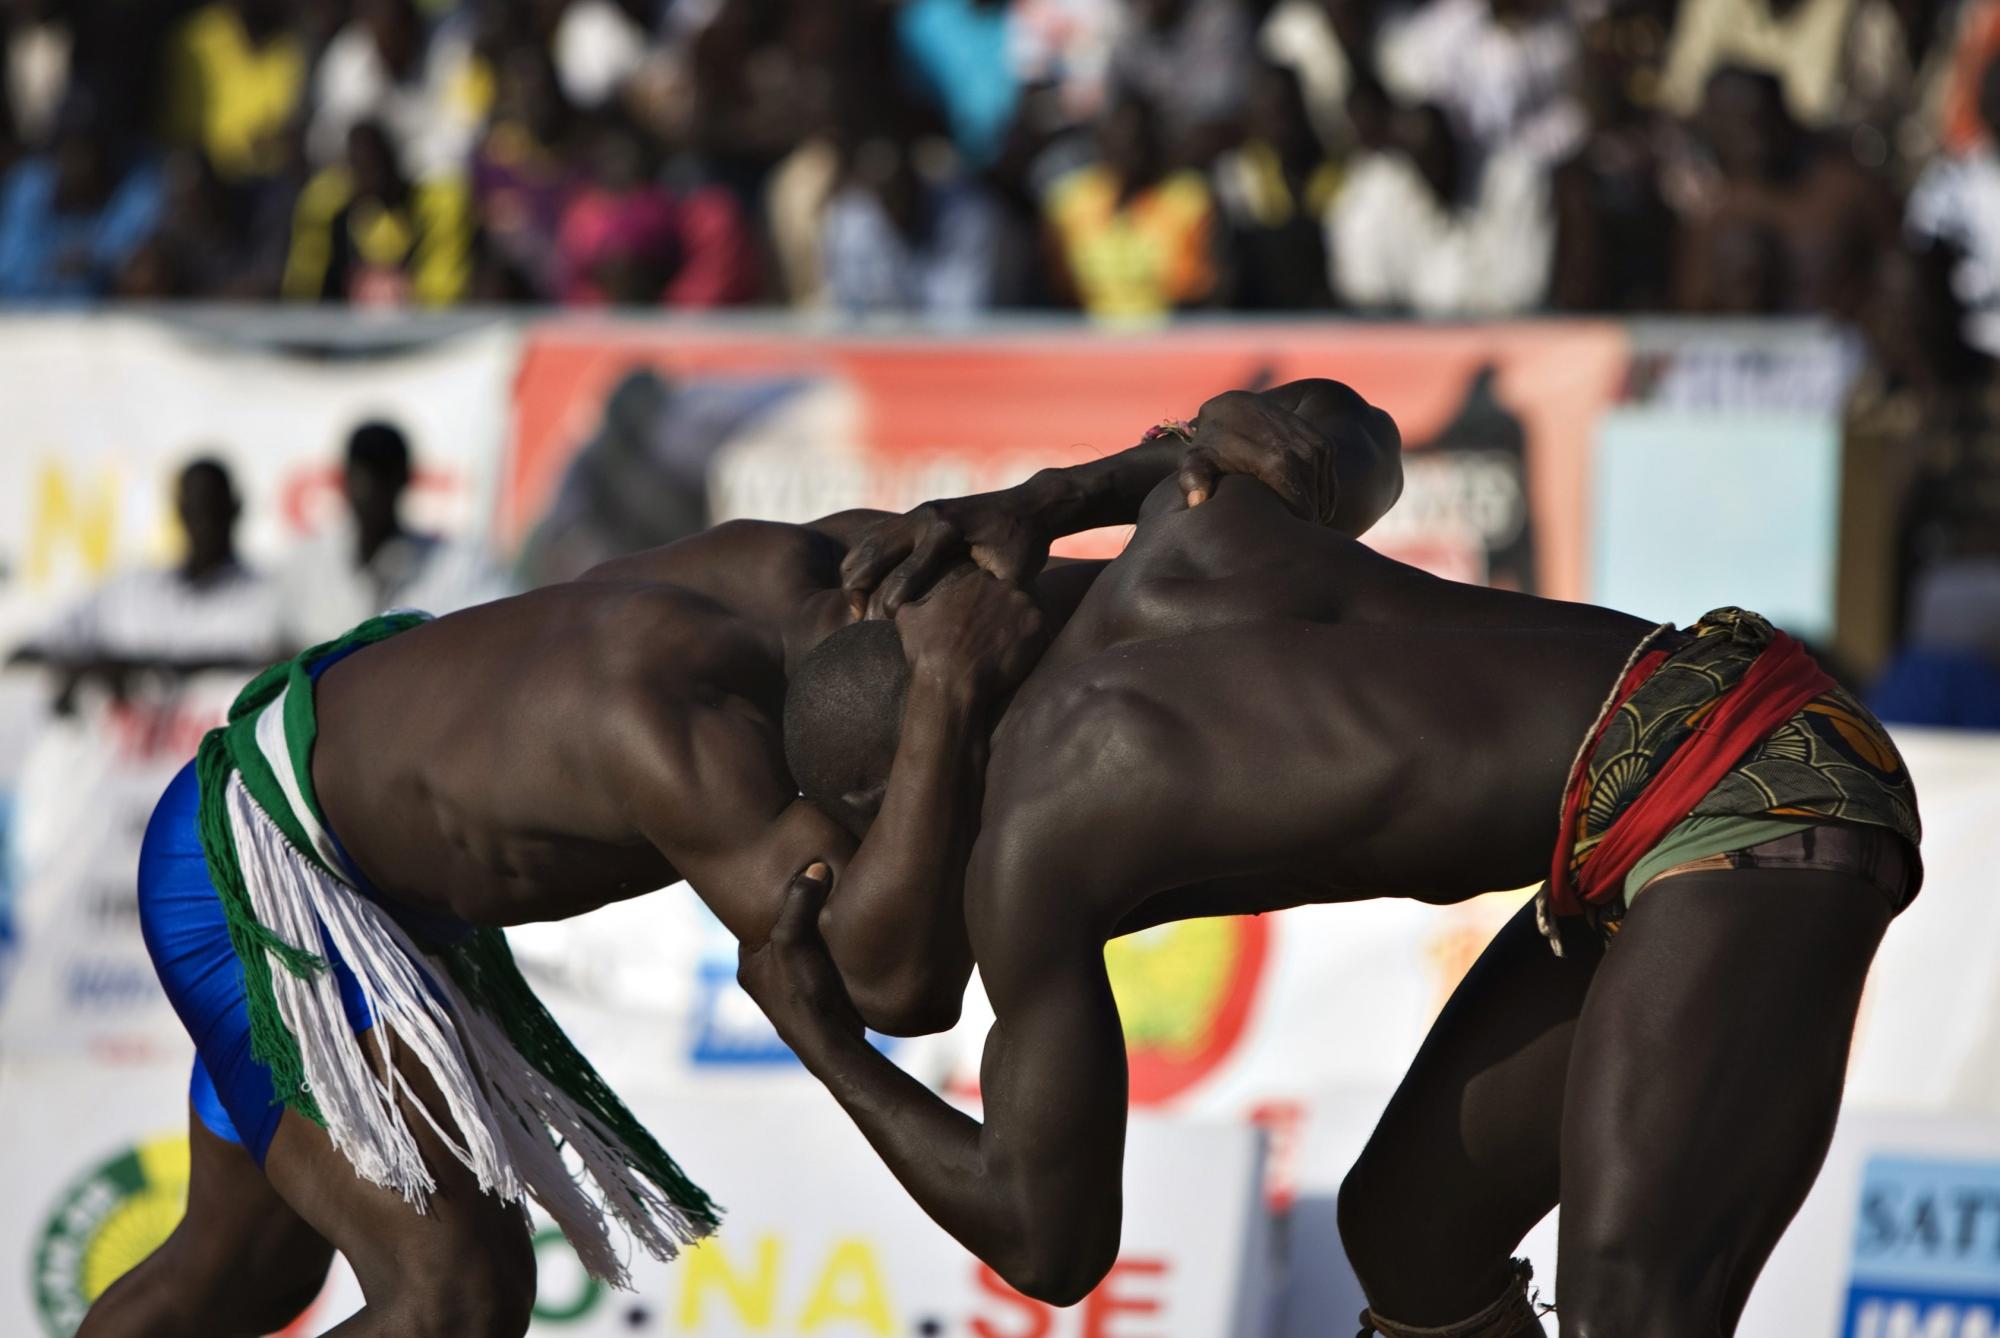 Traditional wrestling of Senegal